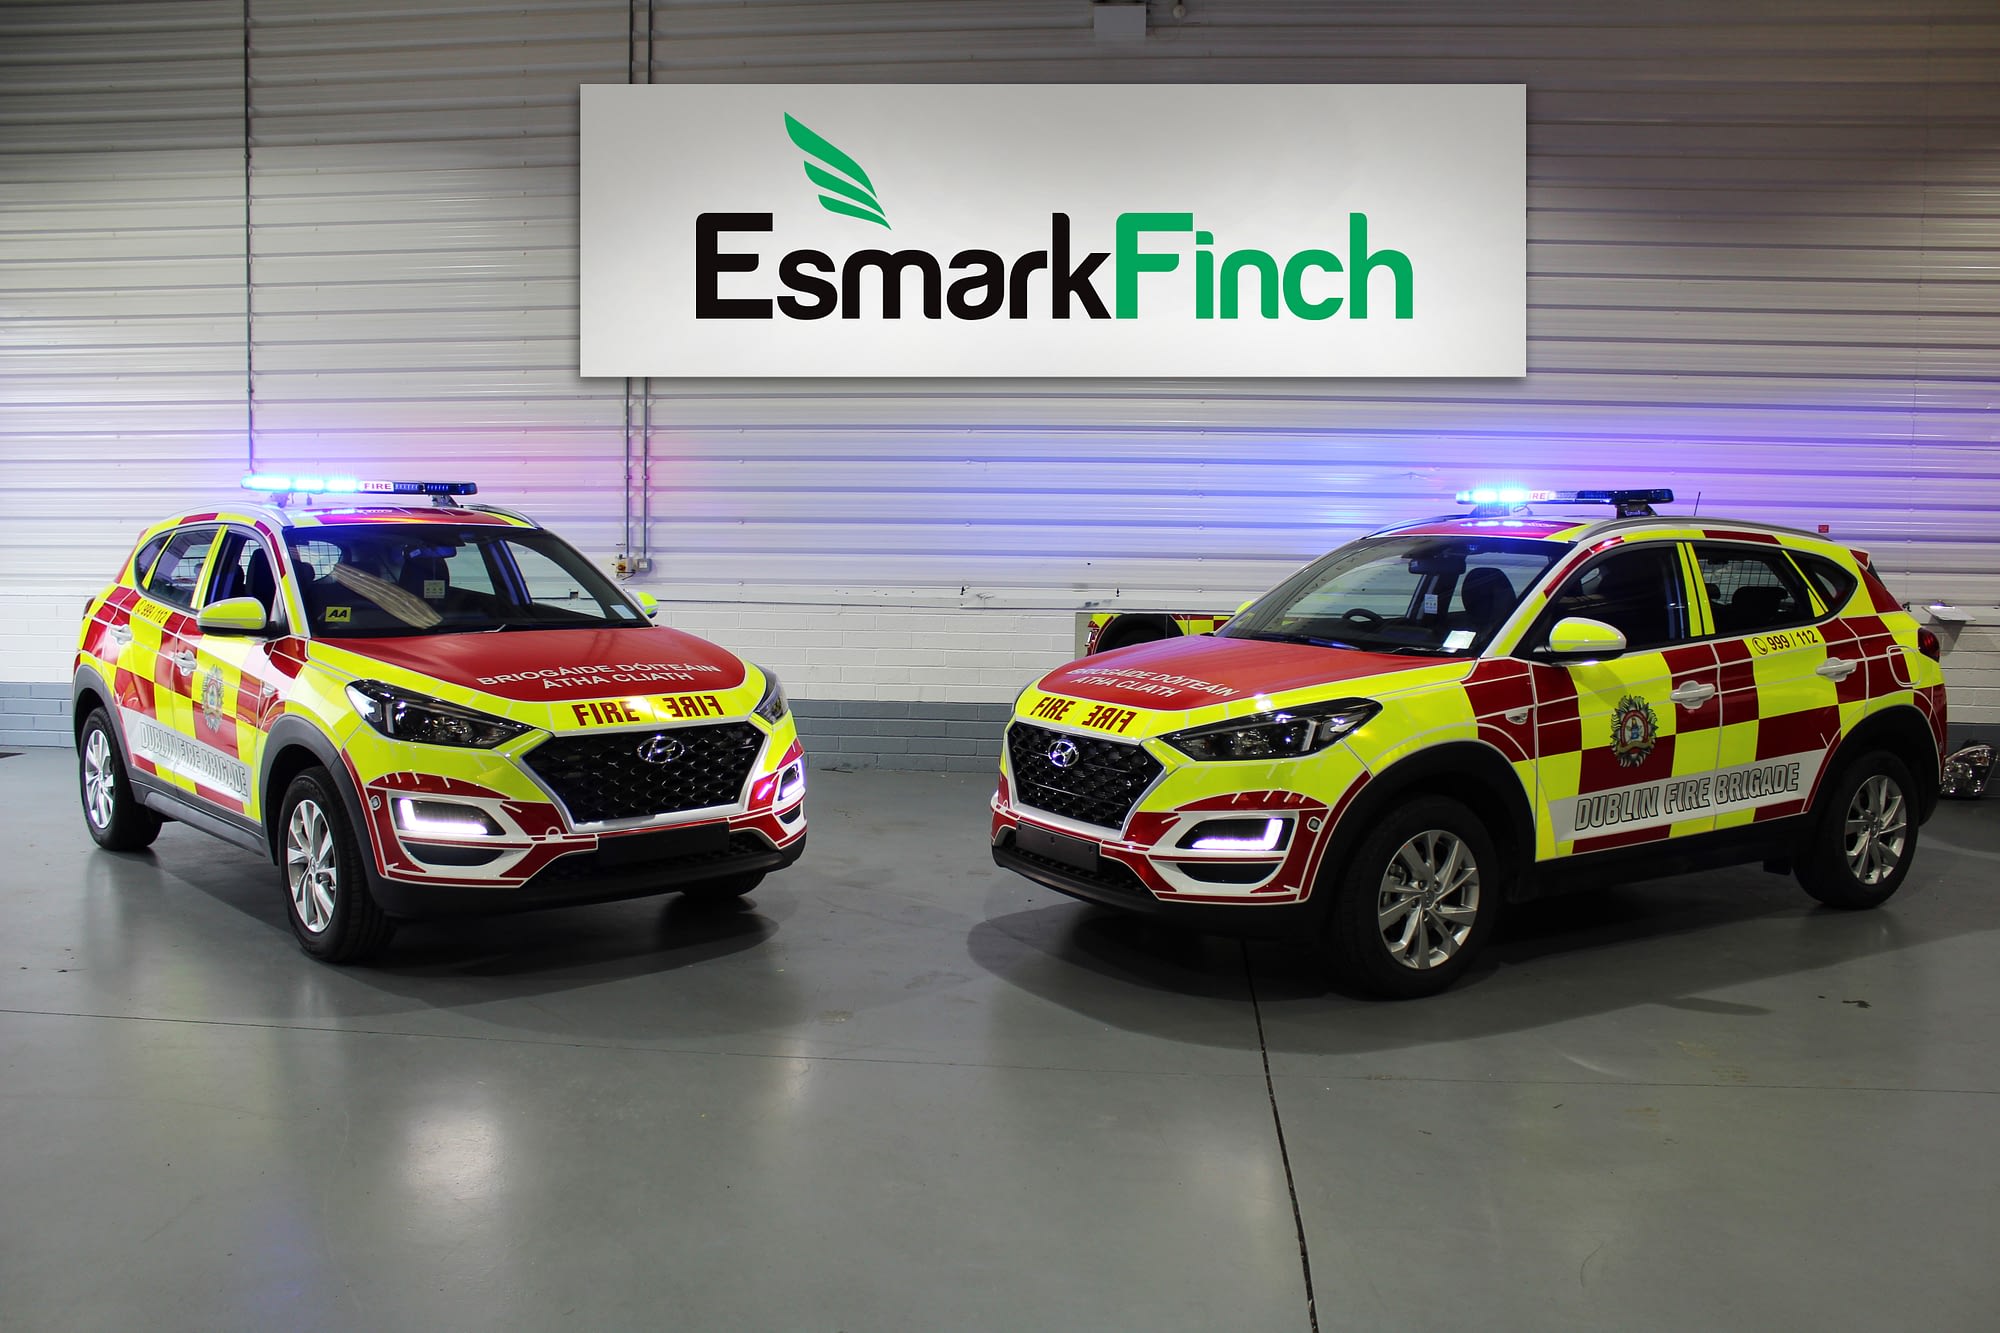 Esmark Finch transform hyundai tucsons fro Dublin Fire Brigade